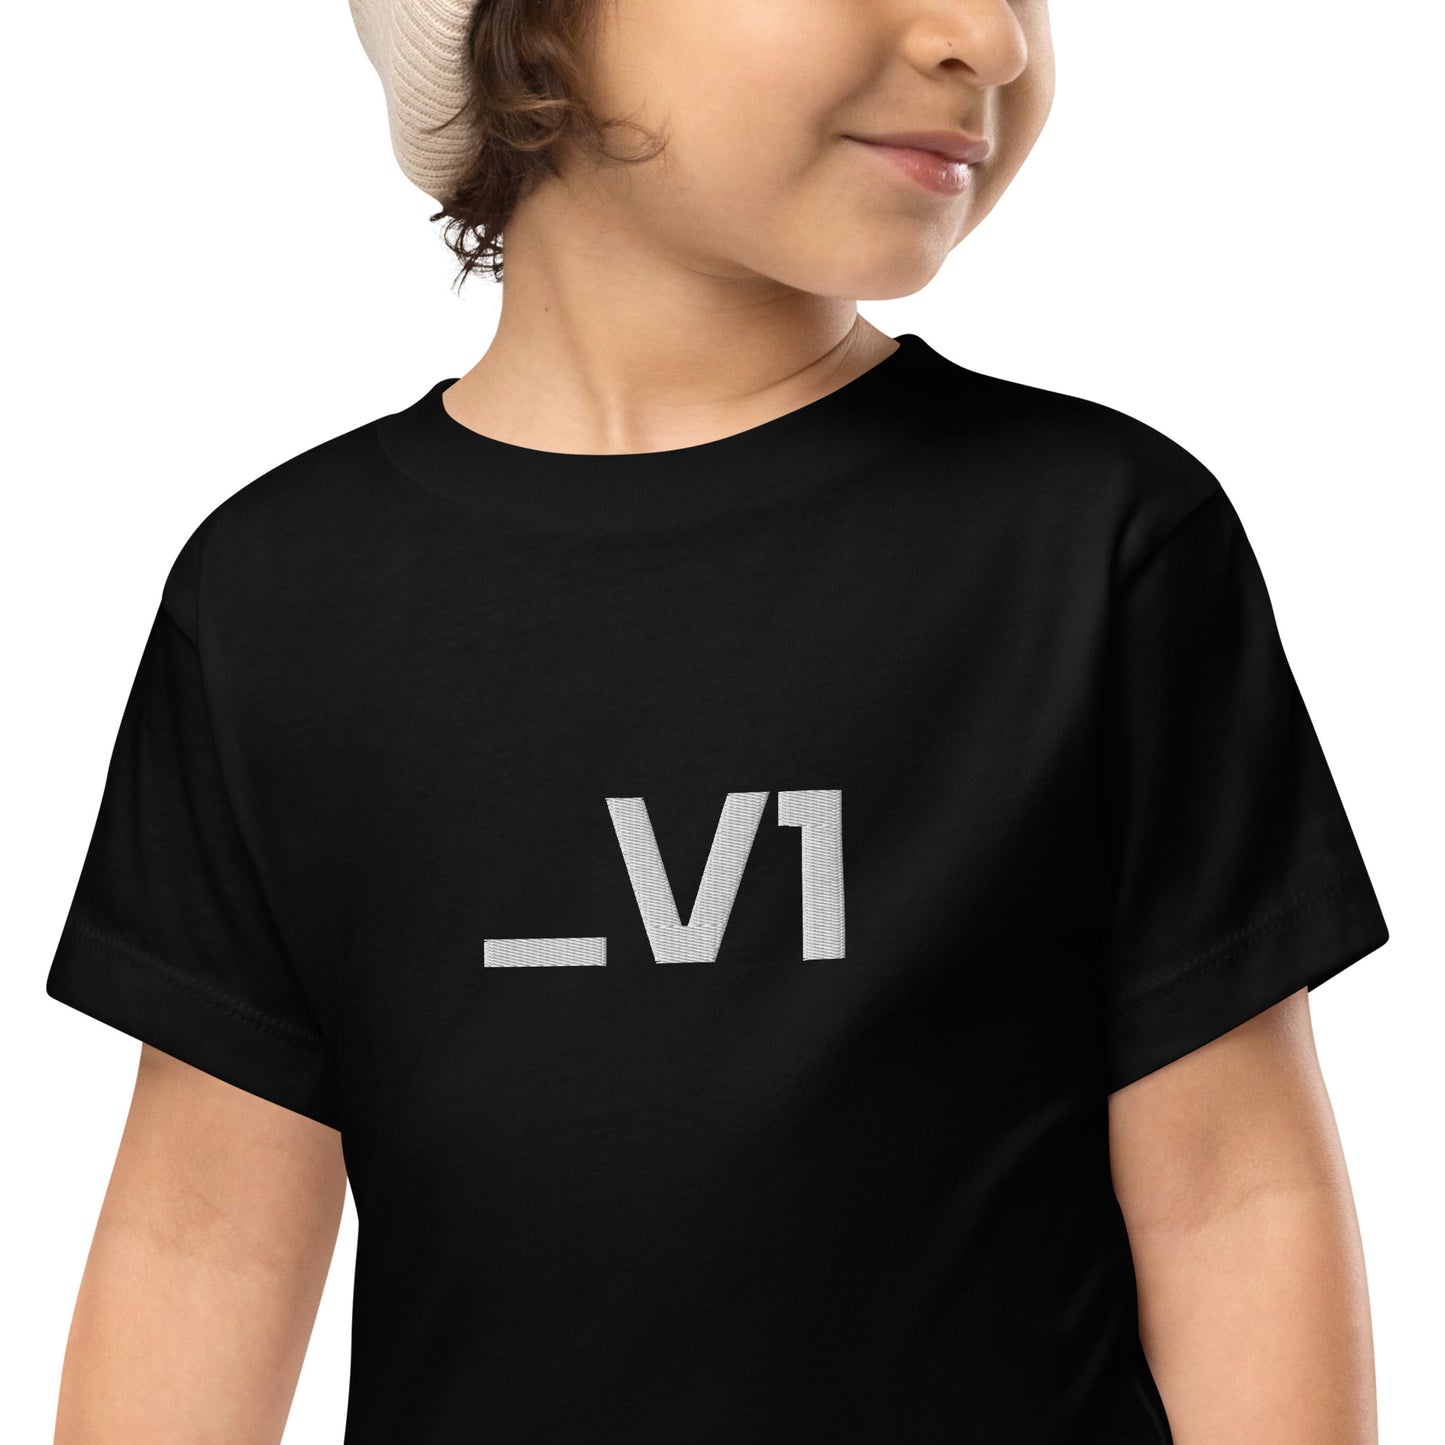 _V1 Embroidered Toddler Short Sleeve Tee